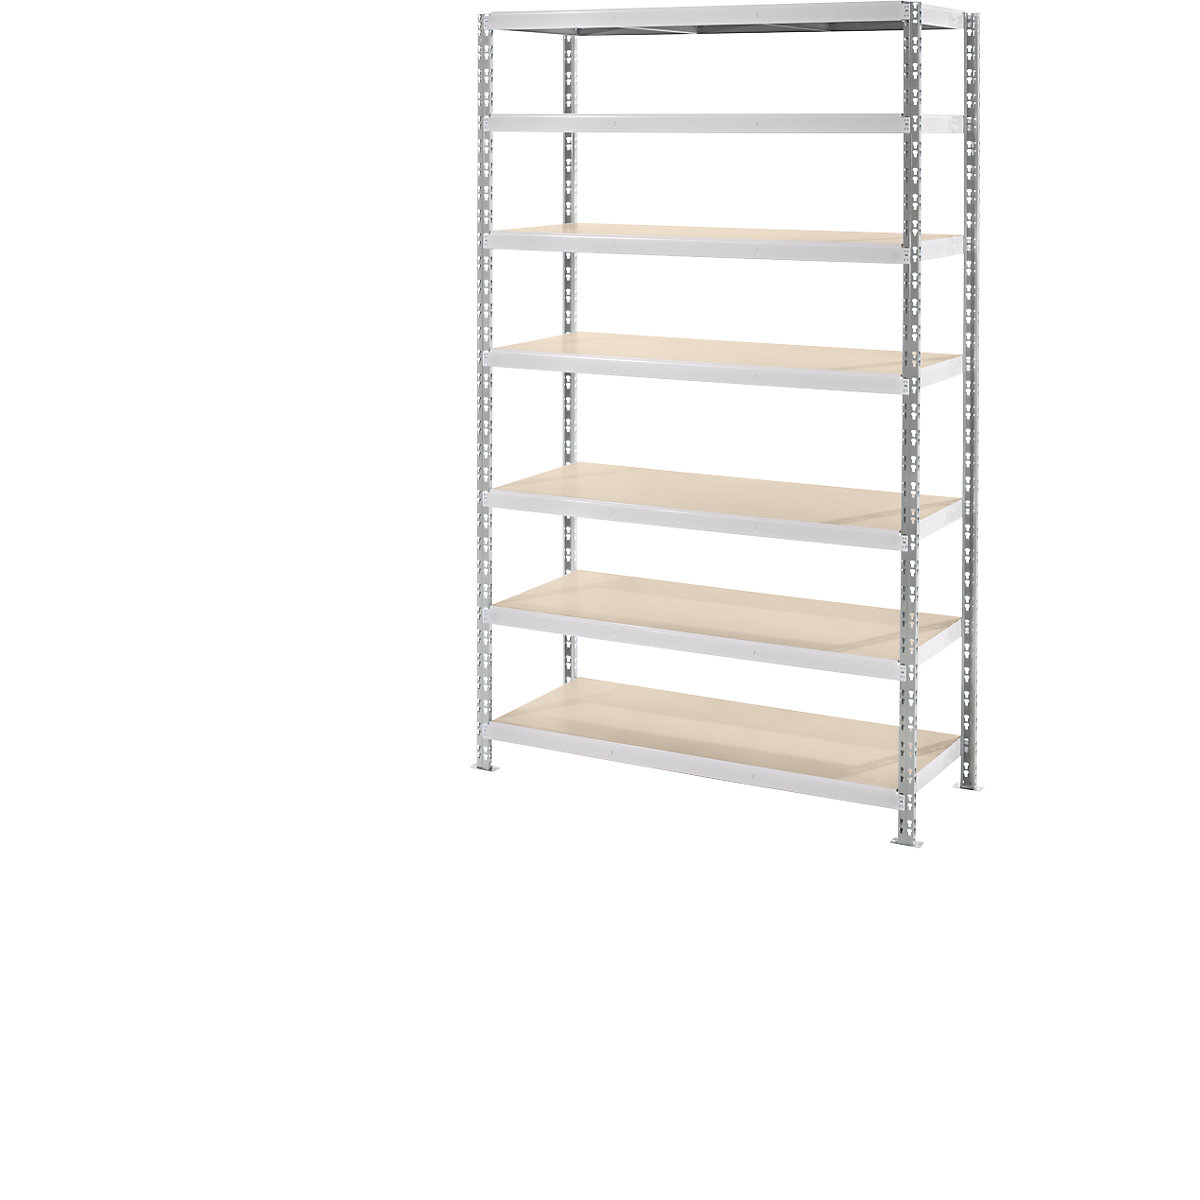 Wide span boltless shelf unit with moulded chipboard shelves, depth 600 mm, standard shelf unit, HxW 2522 x 1550 mm